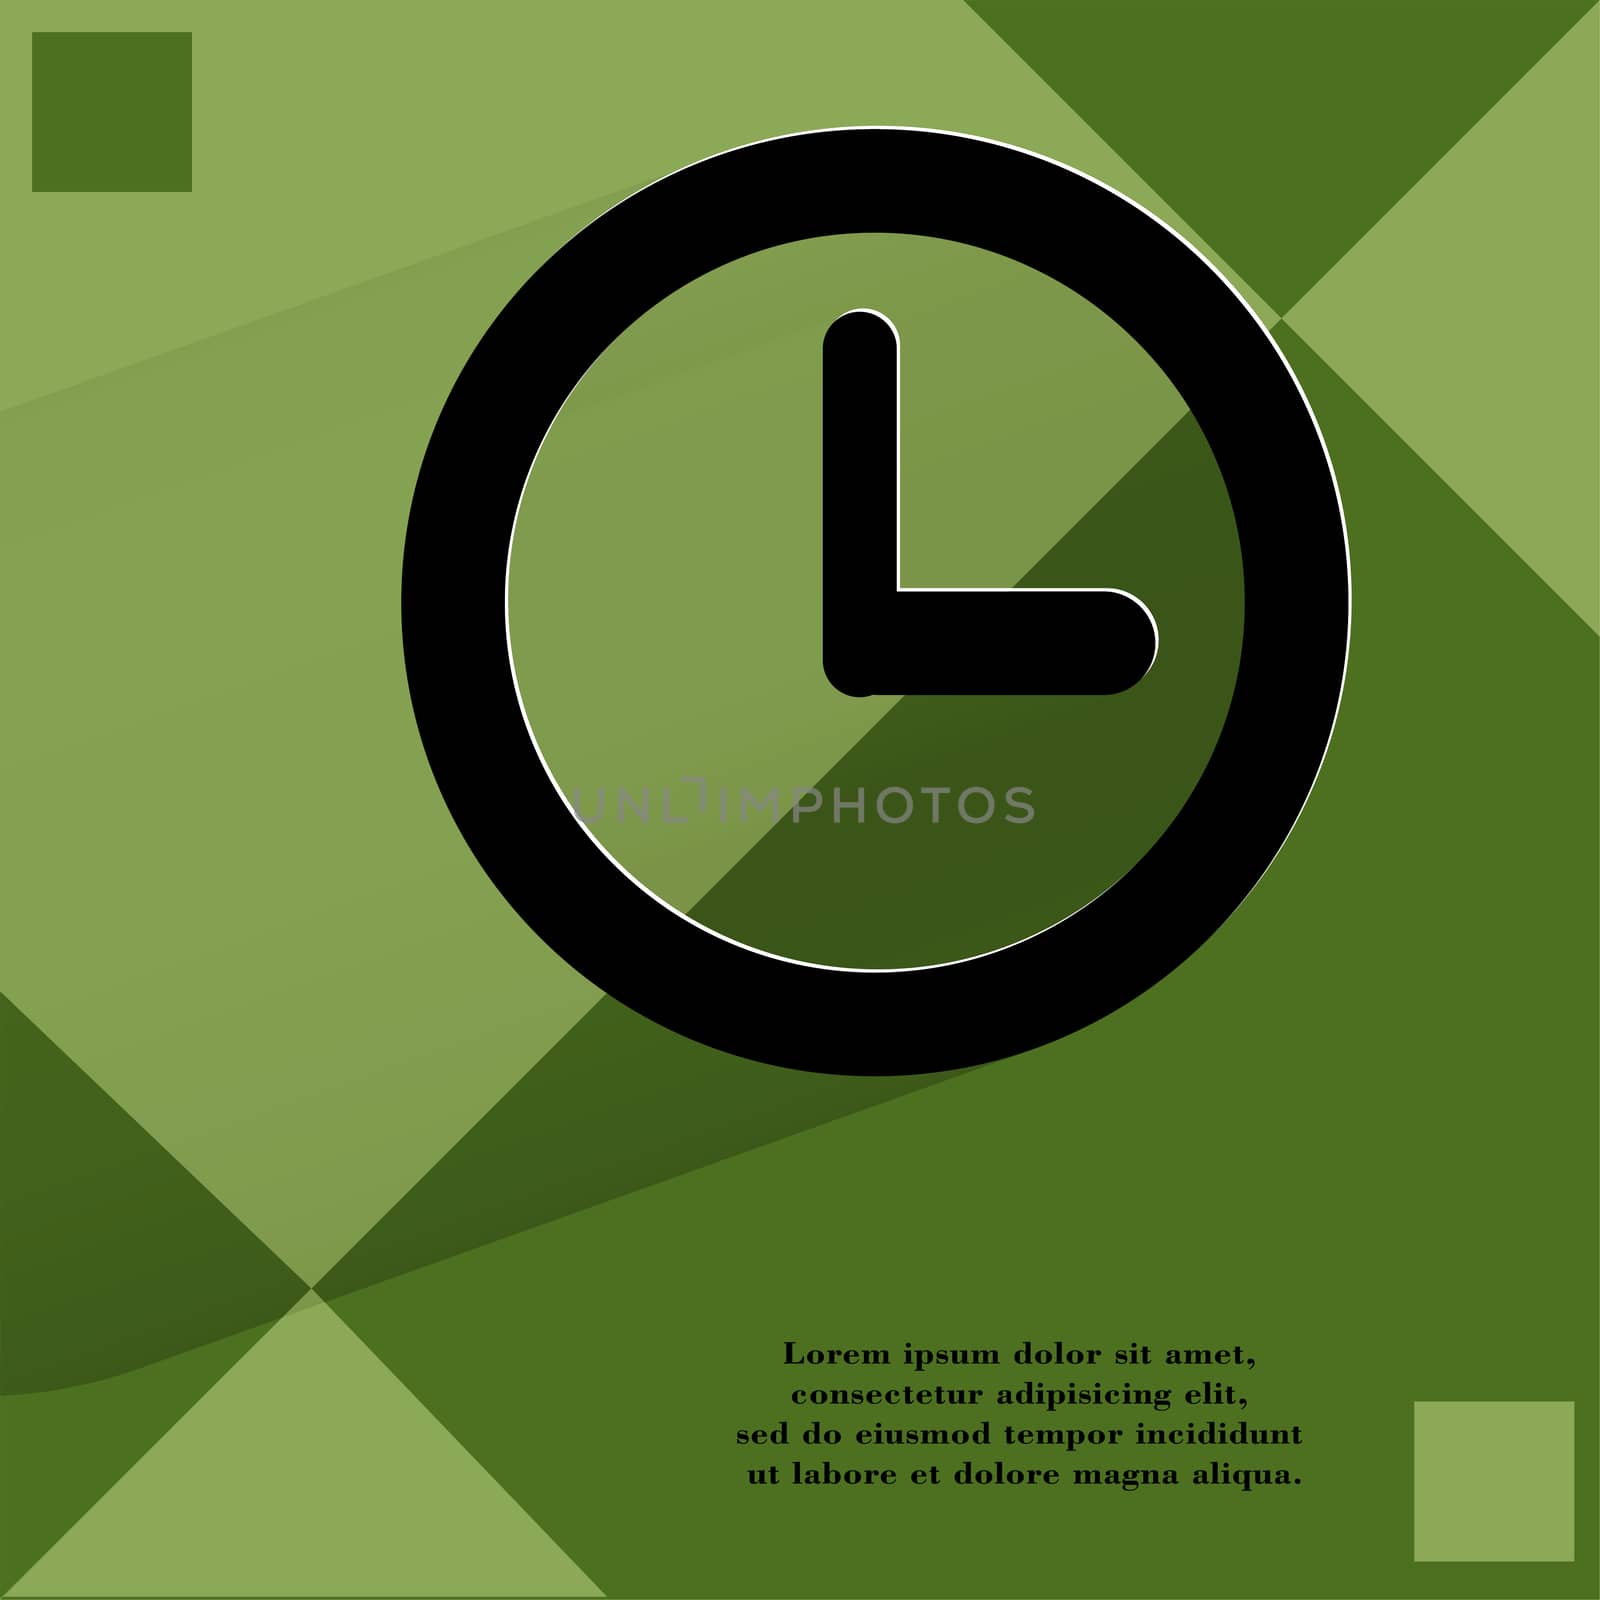 Watch. Flat modern web design on a flat geometric abstract background . 